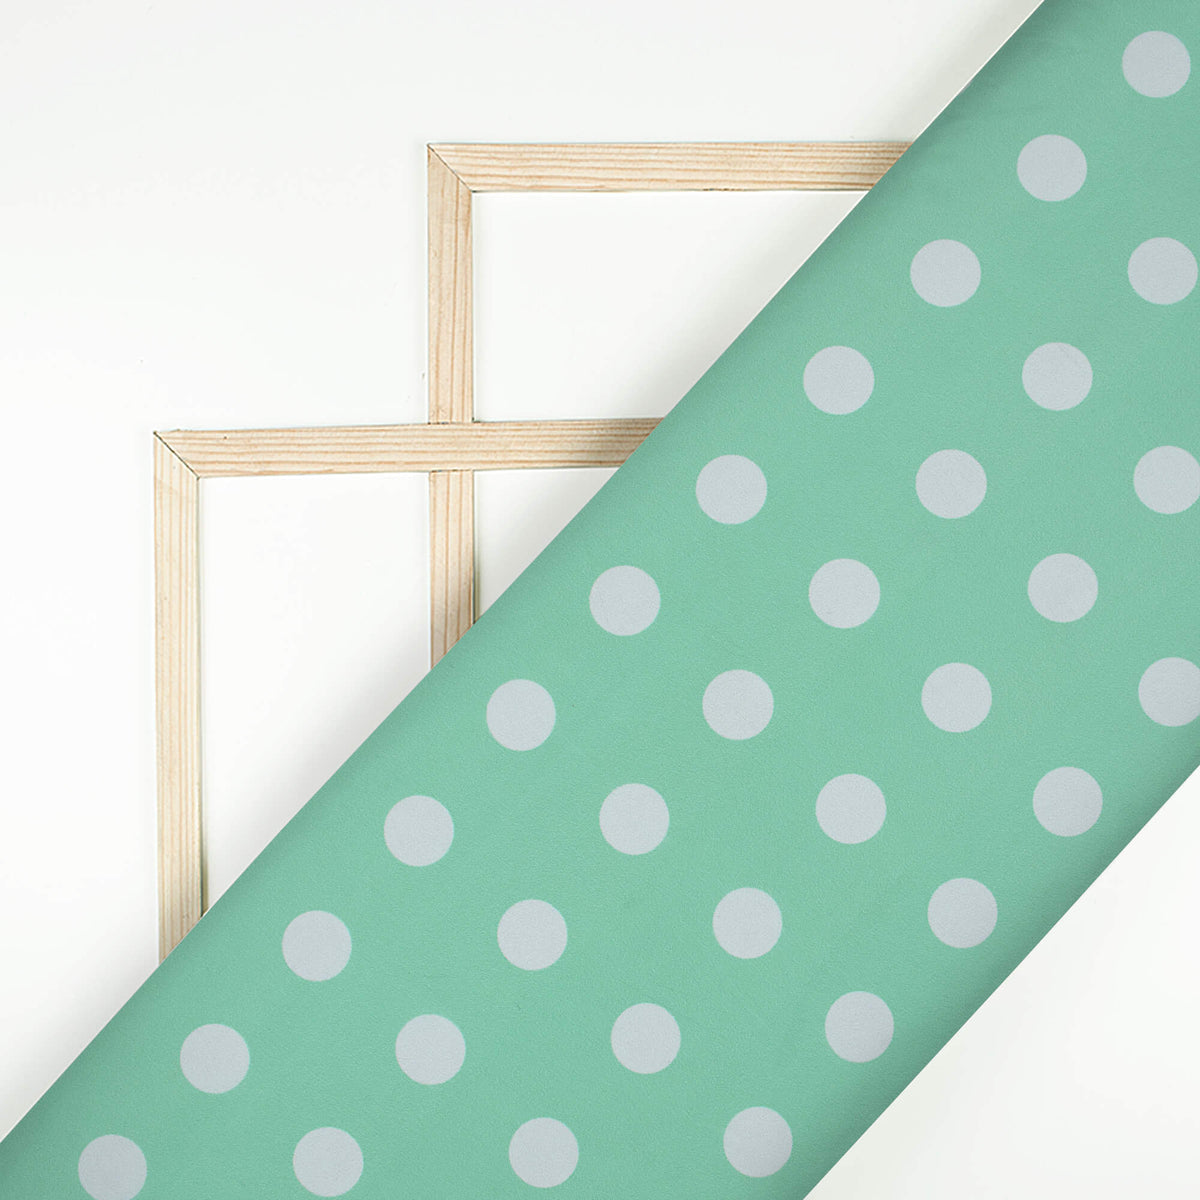 Mint Green And White Polka Dots Pattern Digital Print Georgette Fabric